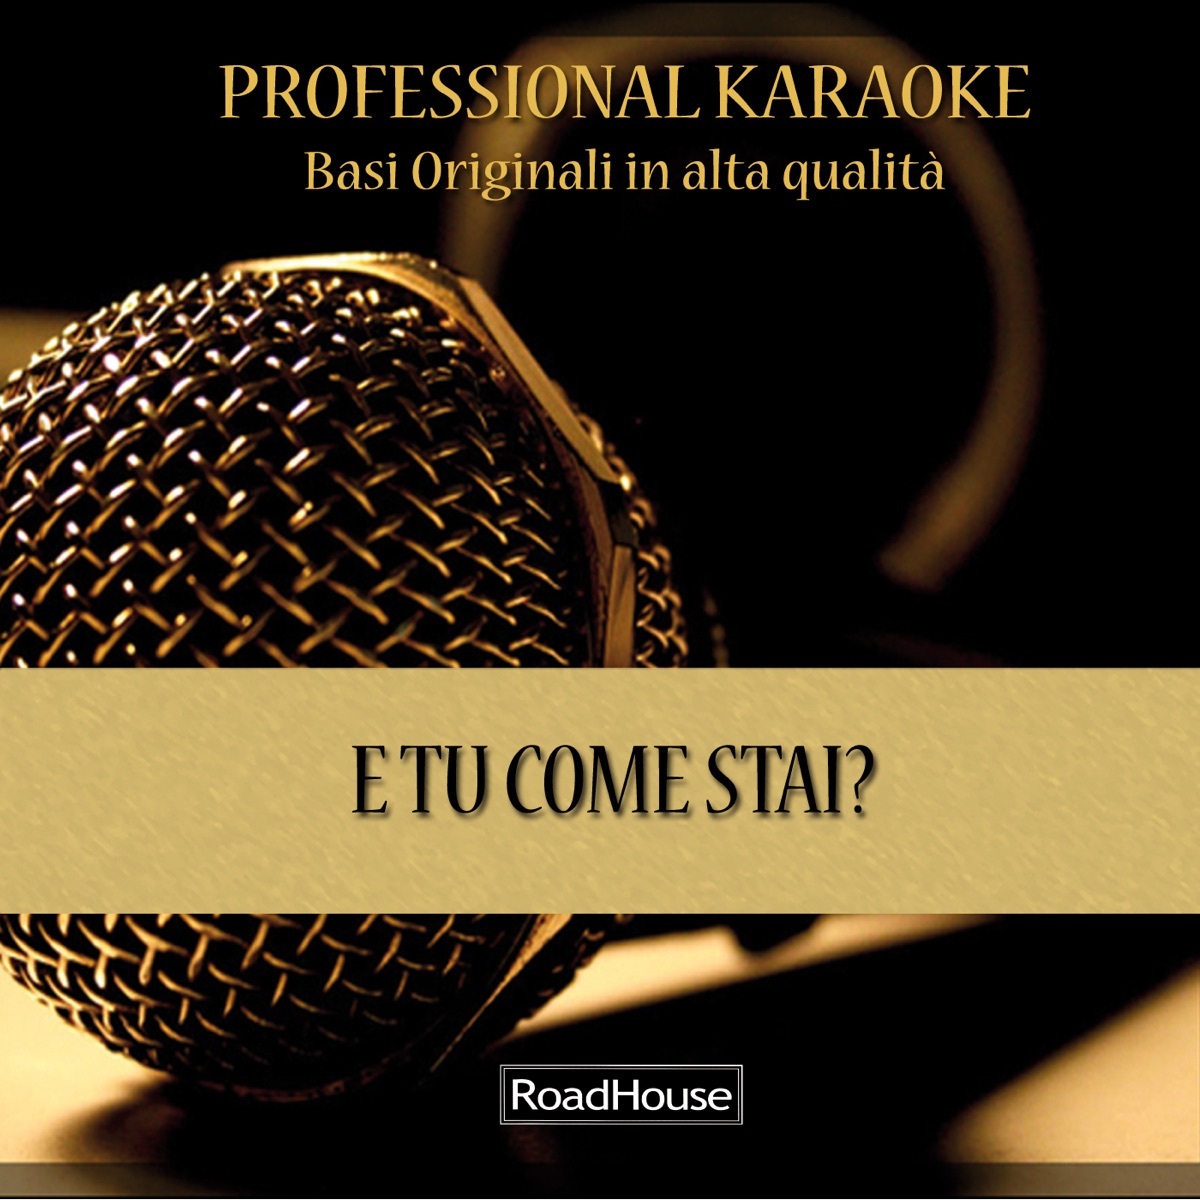 E tu come stai? (Instrumental version) [Originally by Claudio Baglioni] -  Album di Roadhouse Professional Karaoke - Apple Music